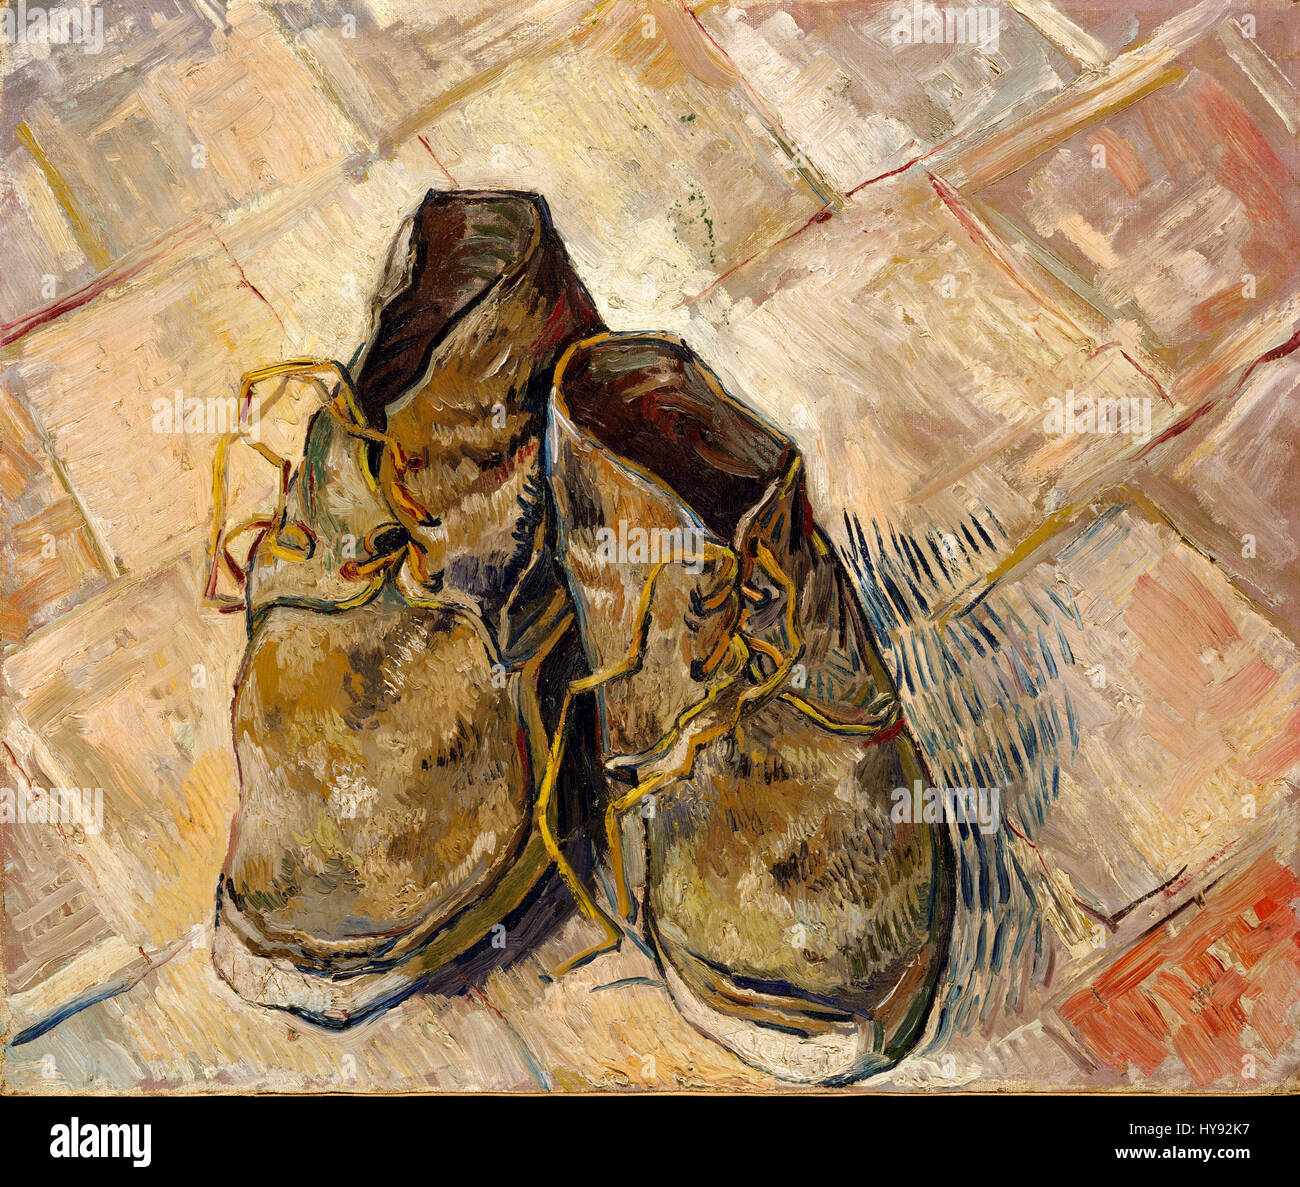 Shoes by Vincent van Gogh Stock Photo